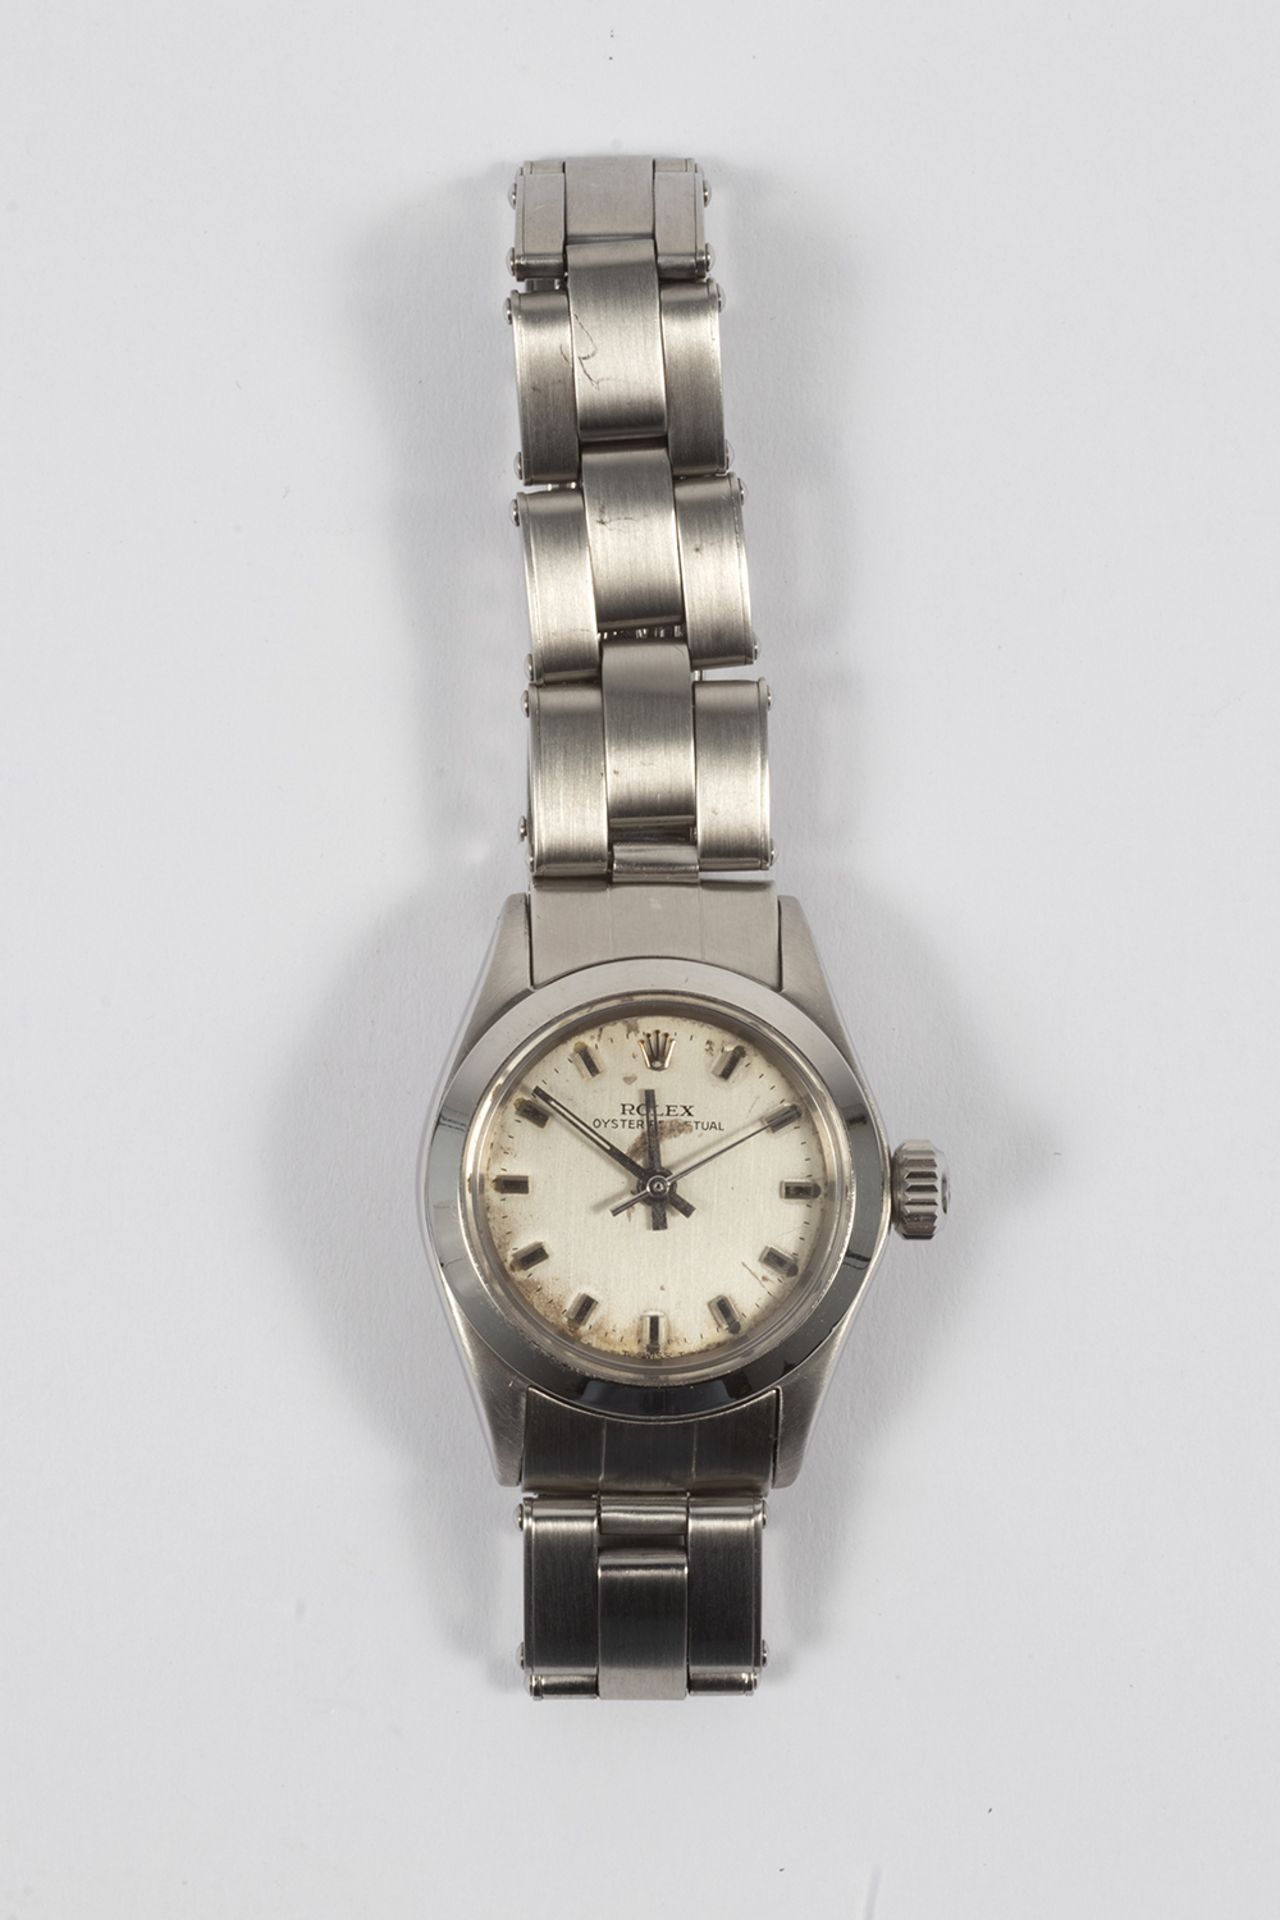 Rólex Oyster Perpetual wristwatch for women.